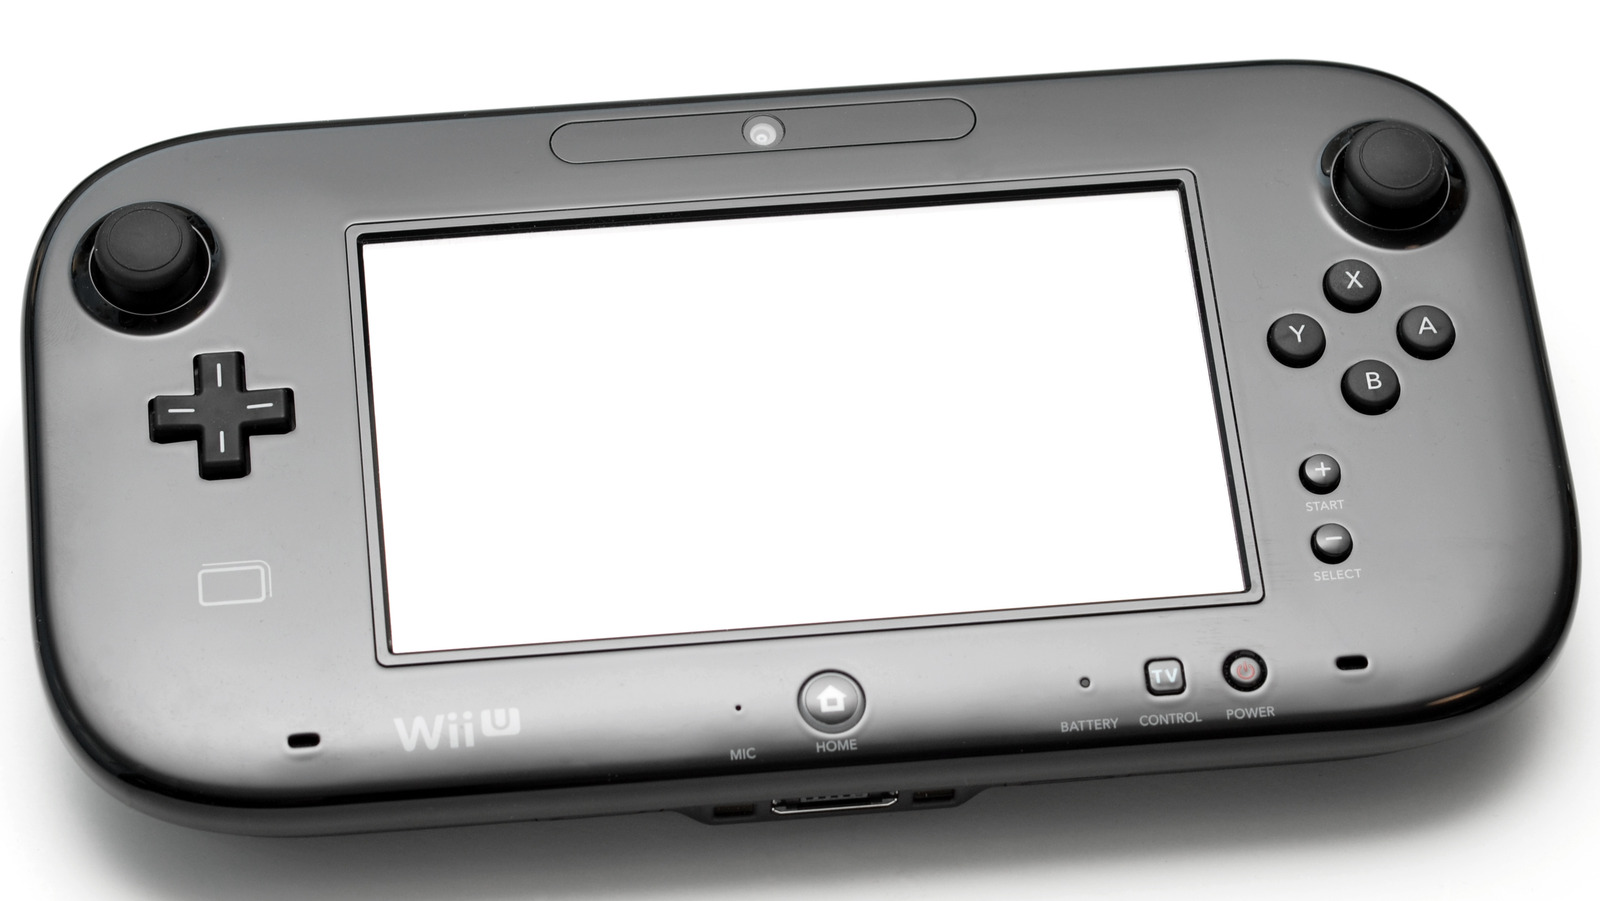 Wii Party U Select (Nintendo Wii U)